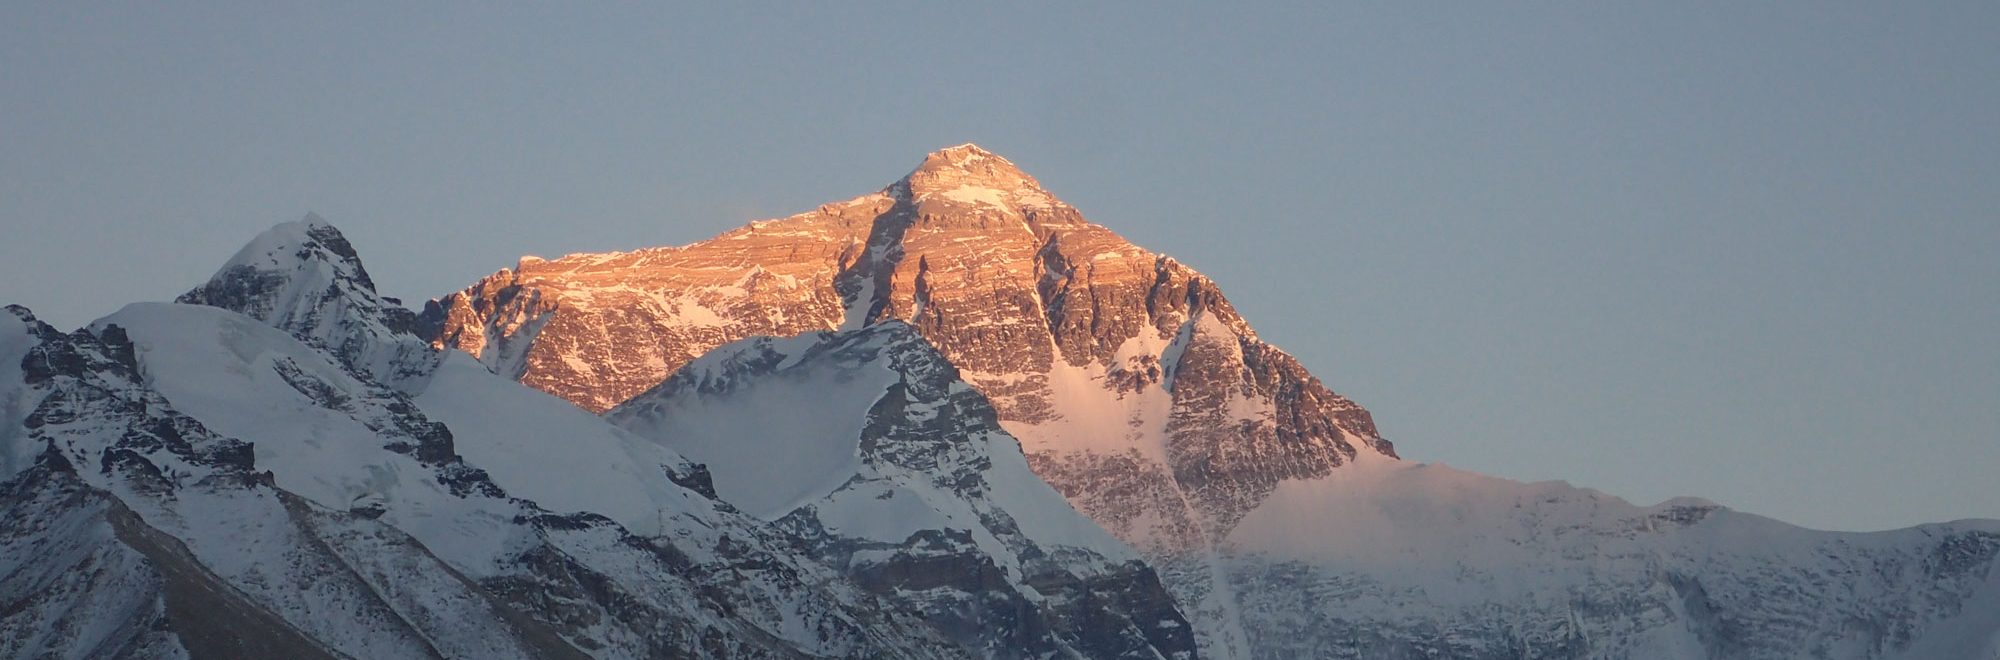 Mount Everest North Side (Tibet)